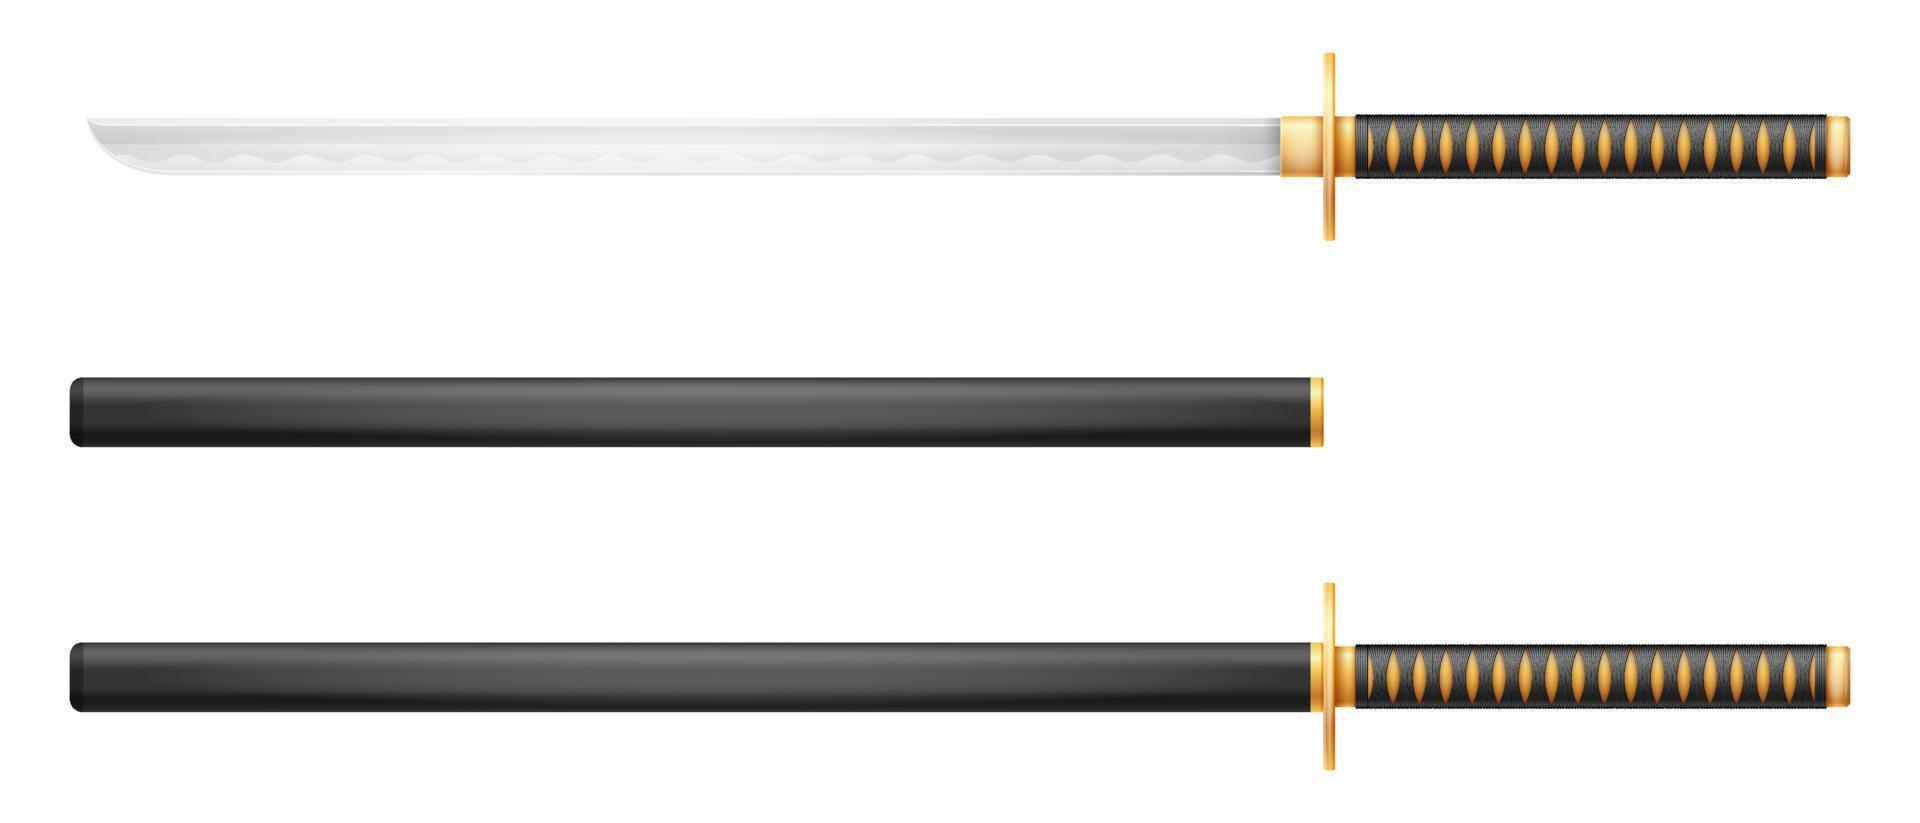 espada katana arma ninja guerrero japonés asesino ilustración vectorial aislado en fondo blanco vector